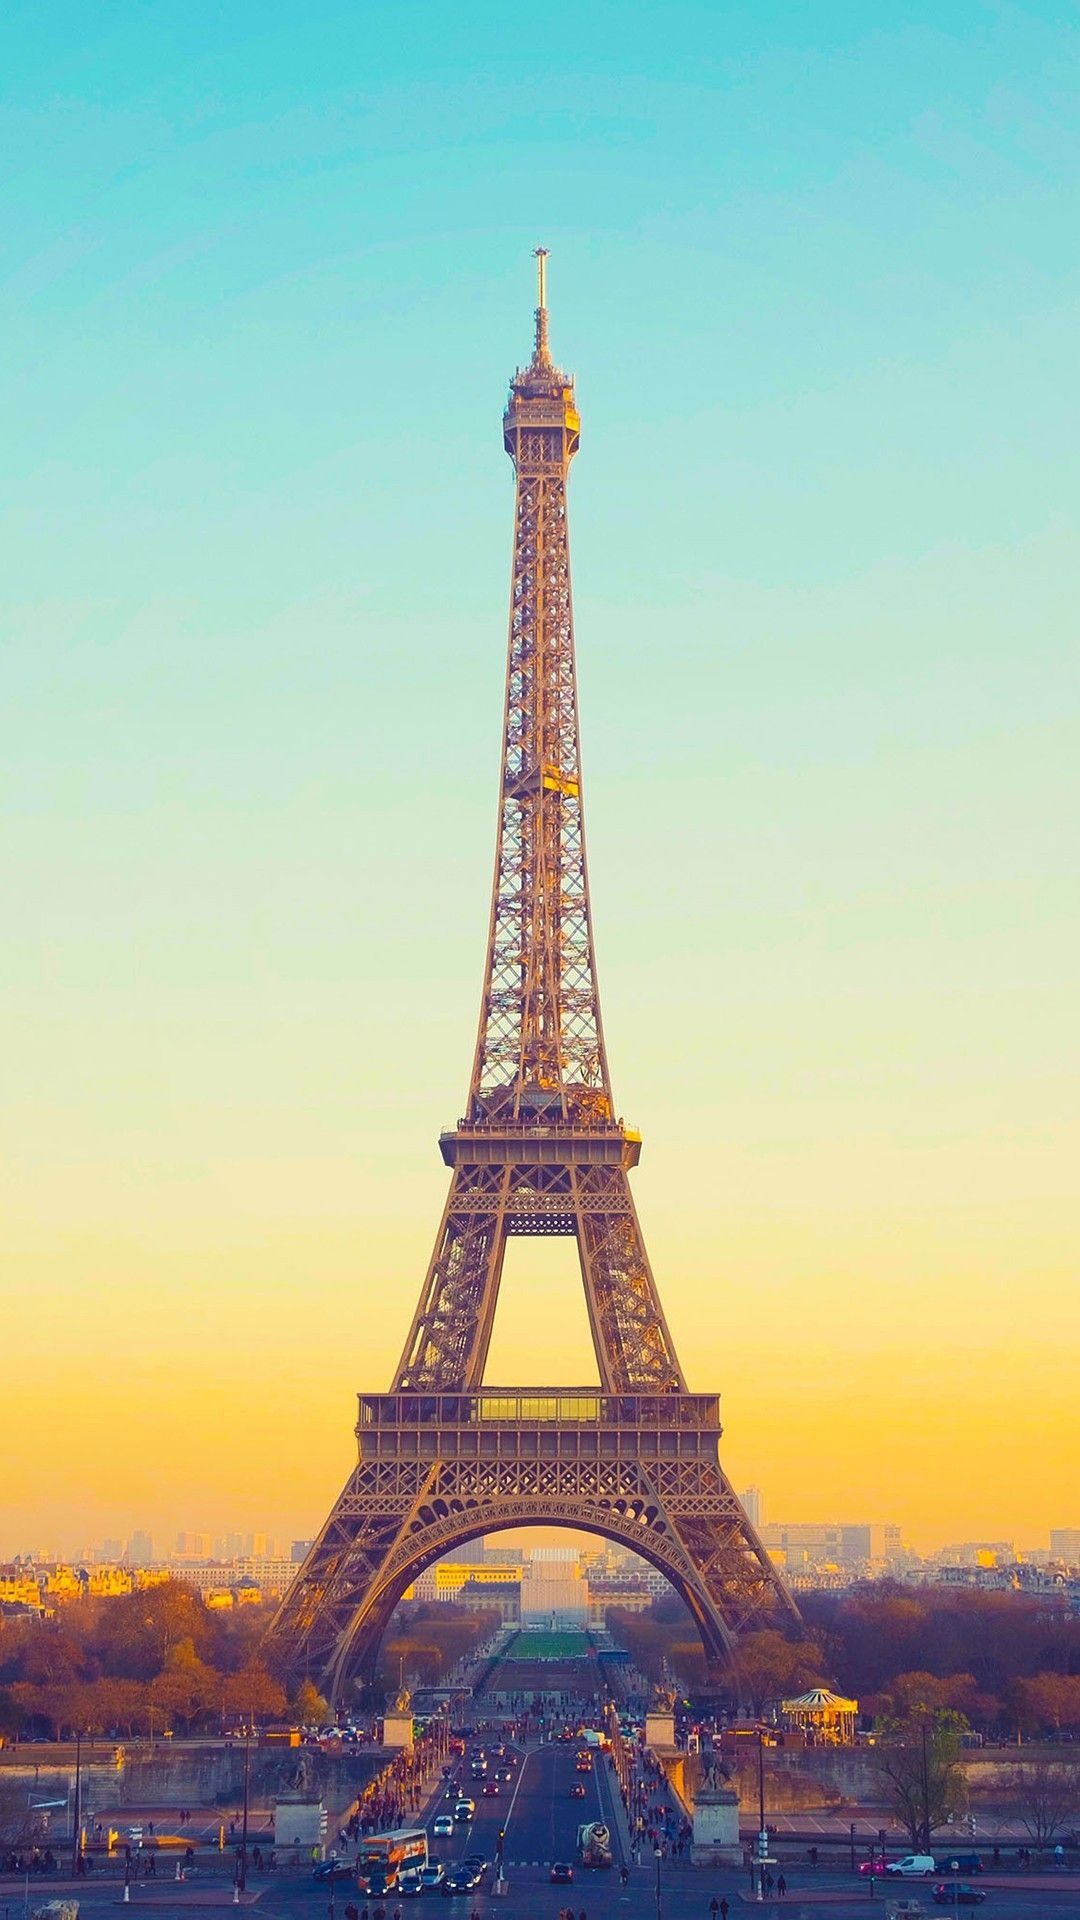 Paris: The European capital of art, fashion, and baguettes. 1080x1920 Full HD Wallpaper.